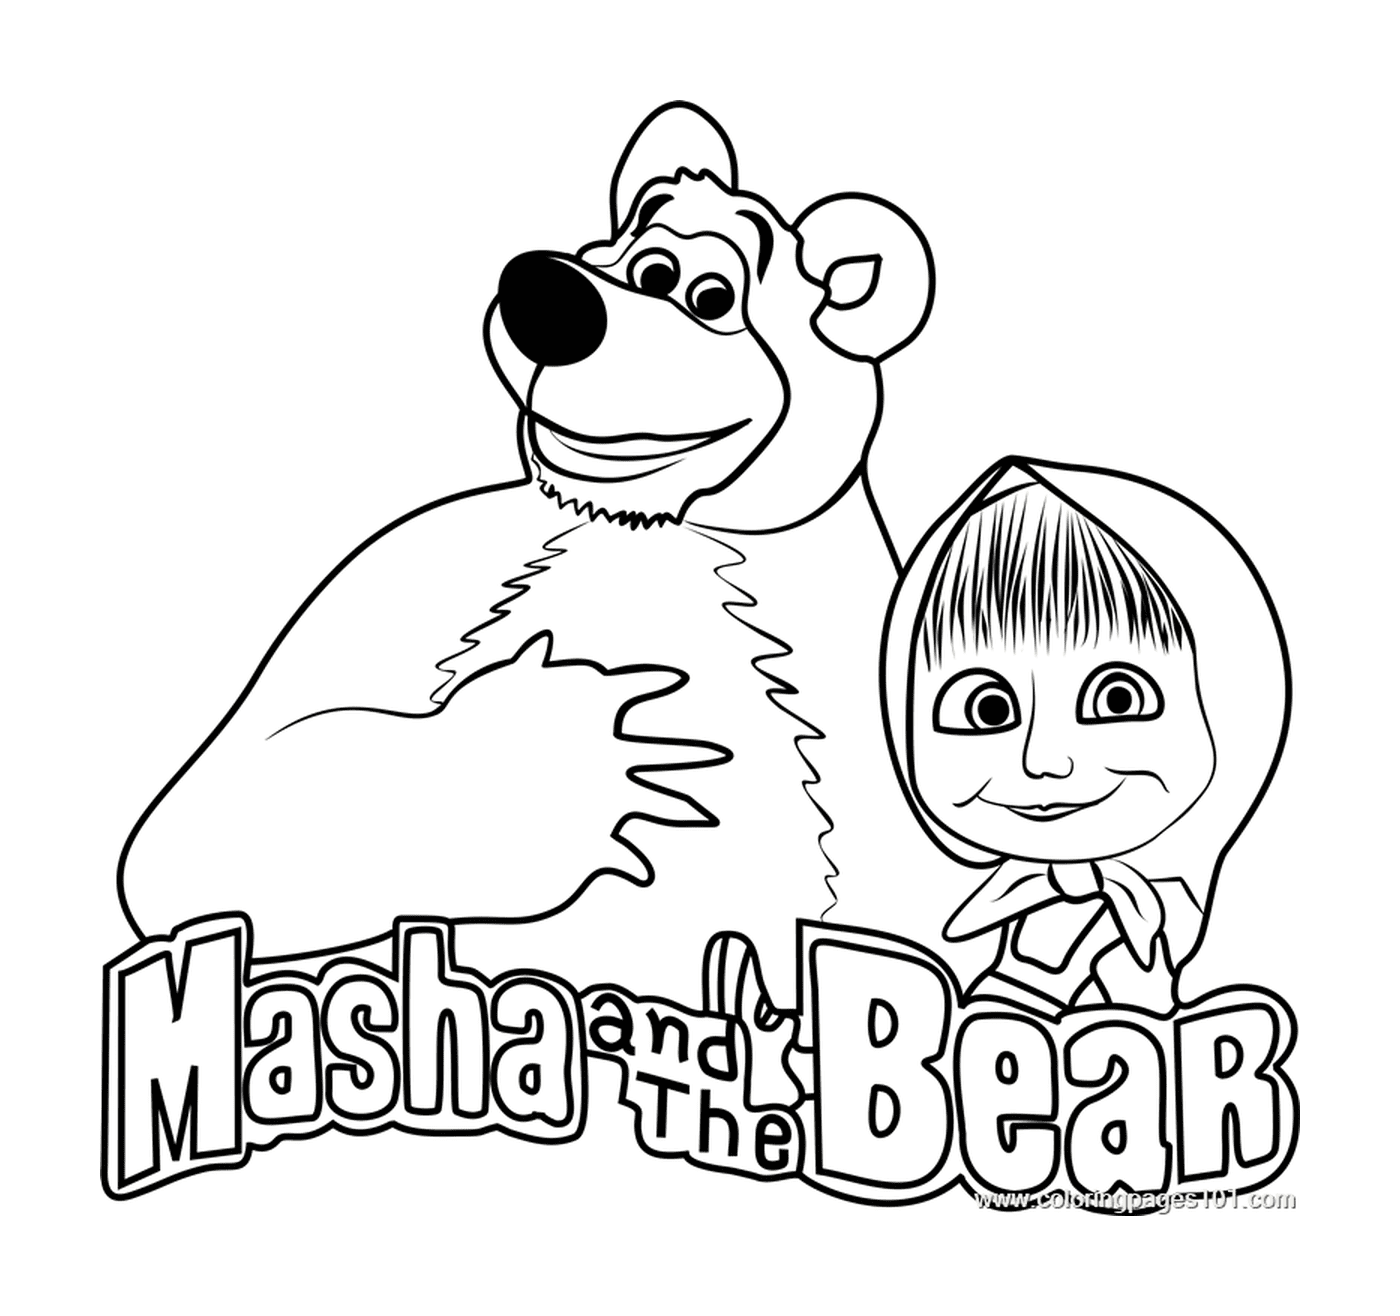  Logo Masha e Michka, un adorabile duo 